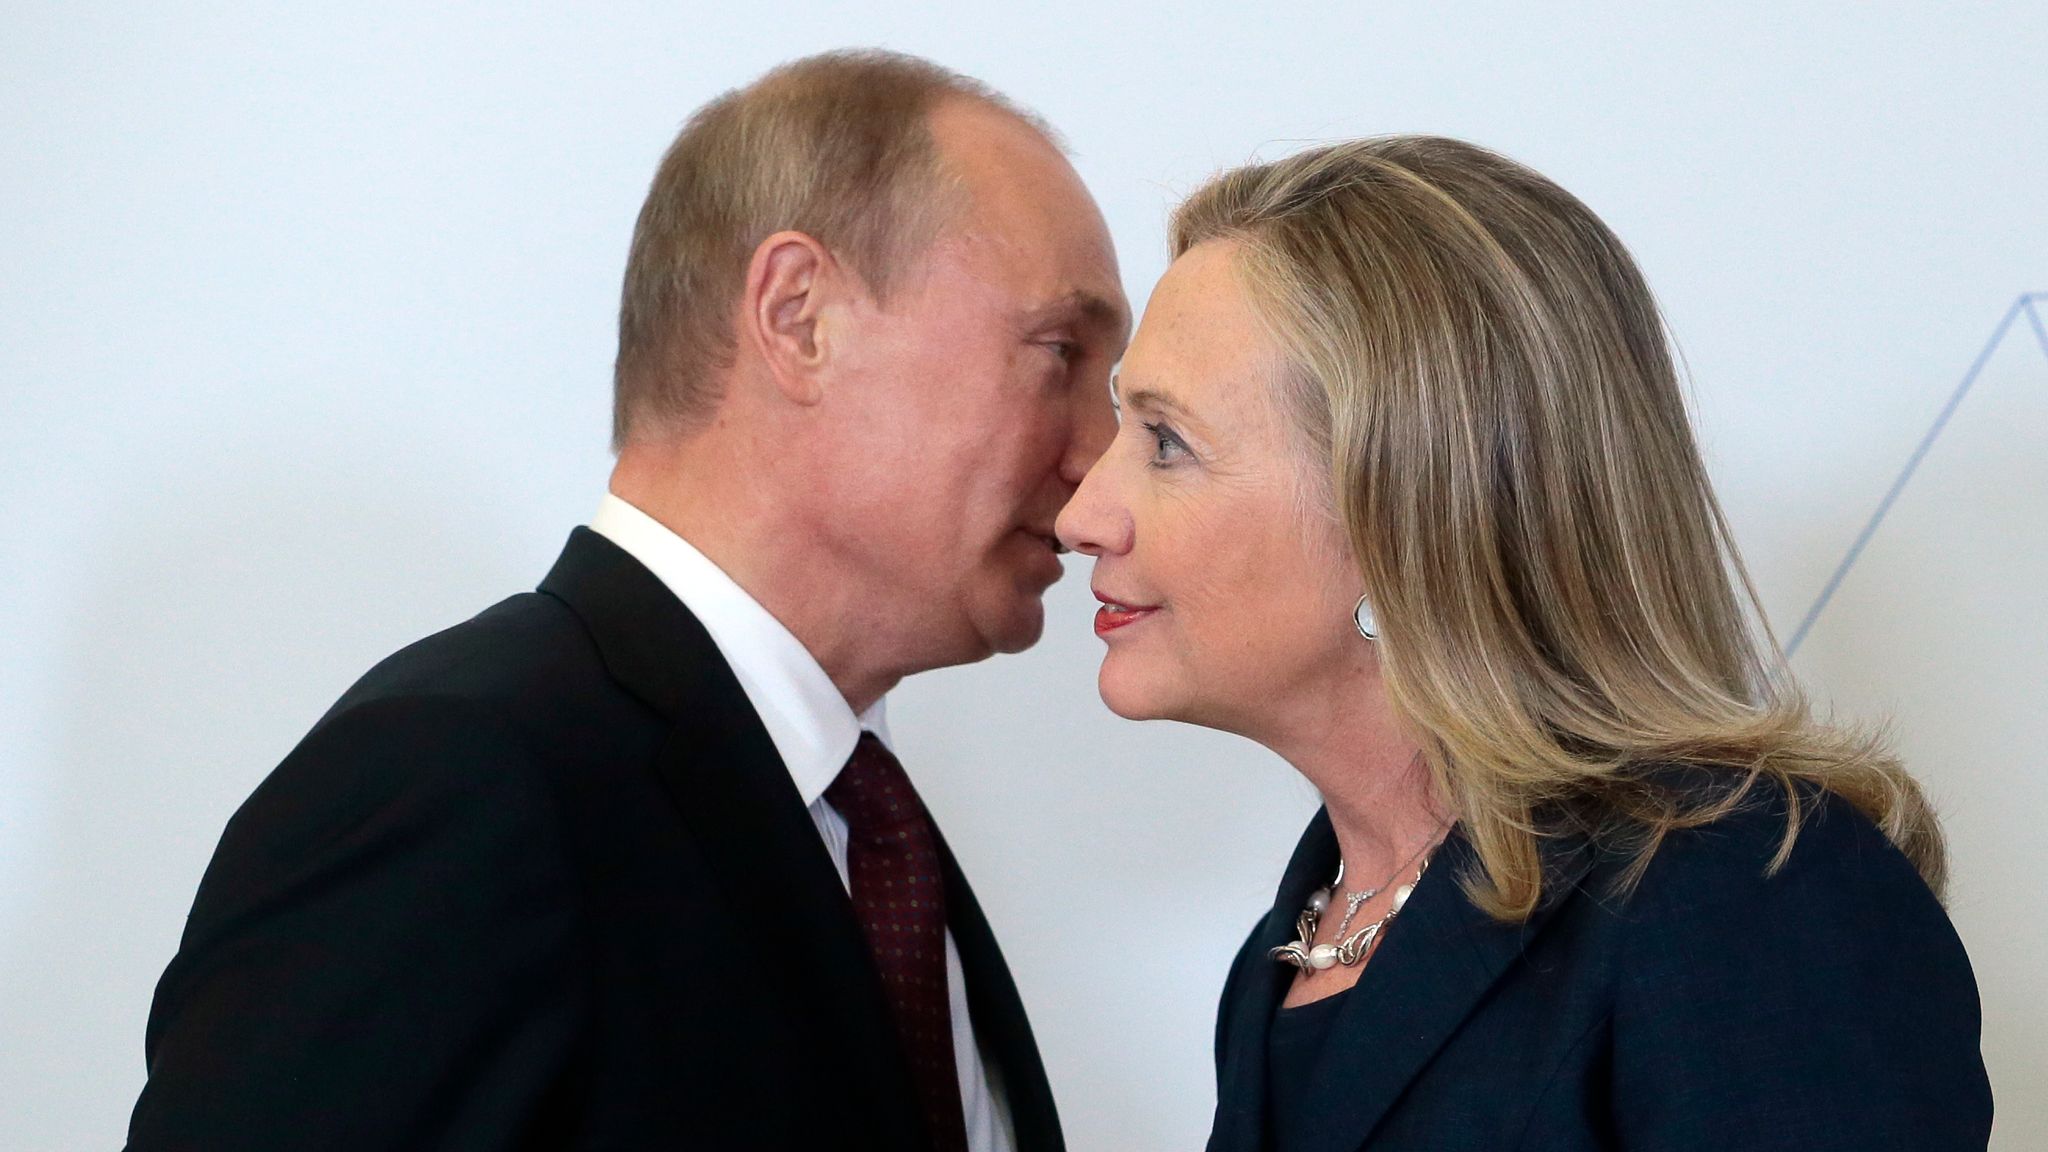 Hillary Clinton says Trump is doing 'Putin's bidding